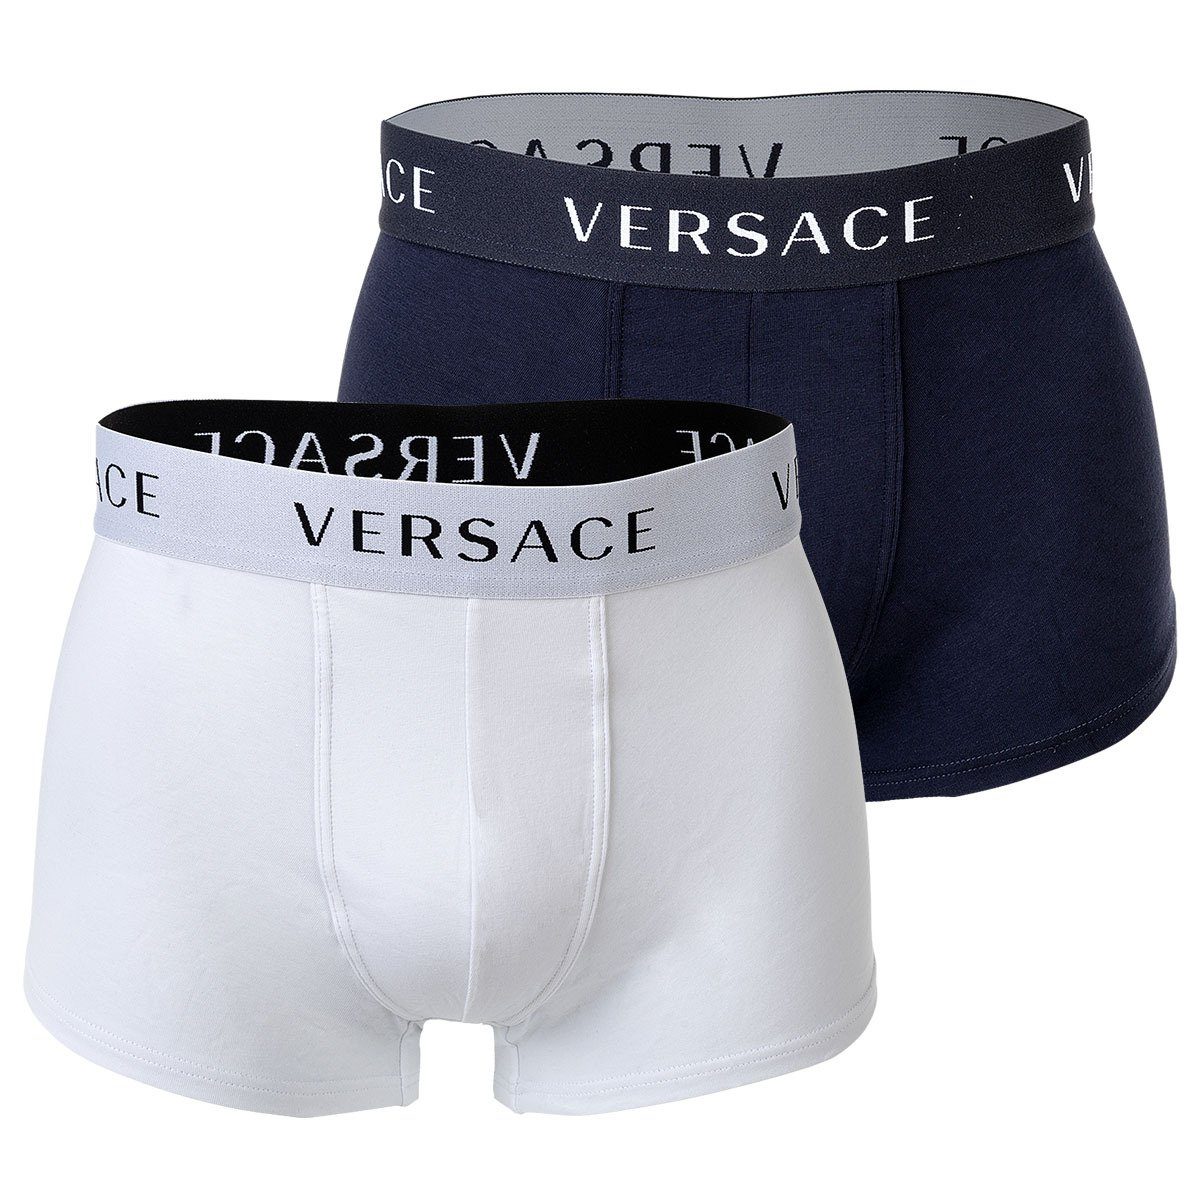 Versace Boxer Herren Boxer Shorts, - Weiß/Blau Pack 2er Trunk